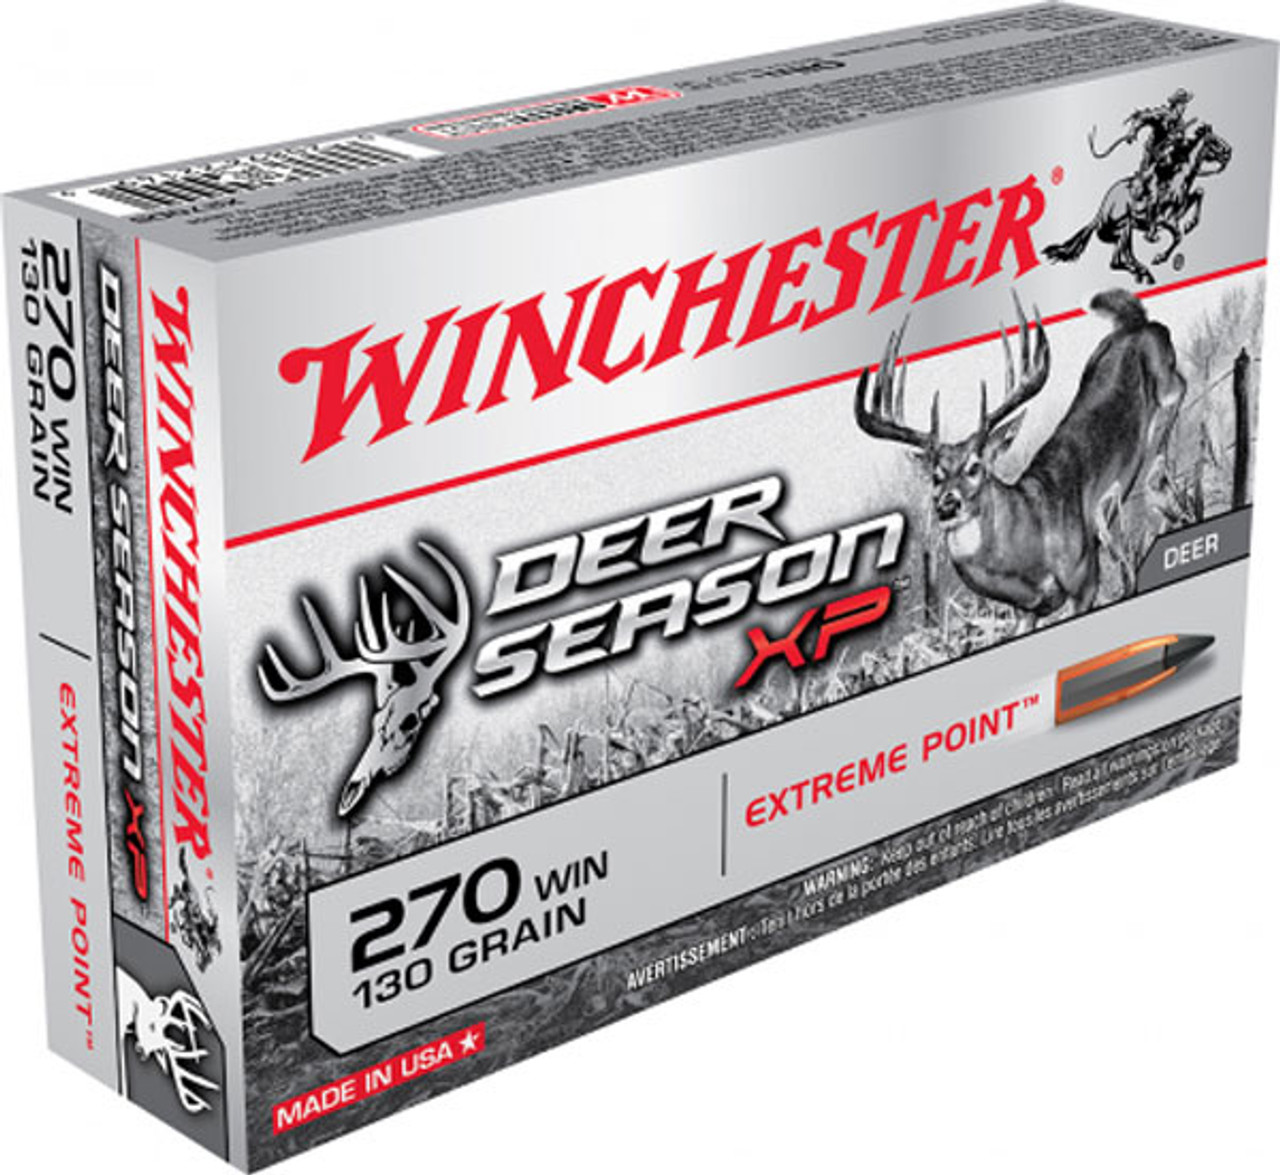 Polymer Tip, 270 020892221499 Win, Box Ammunition Deer Extreme UPC 130 Grain, Season, : Round Winchester 20 Point X270DS,